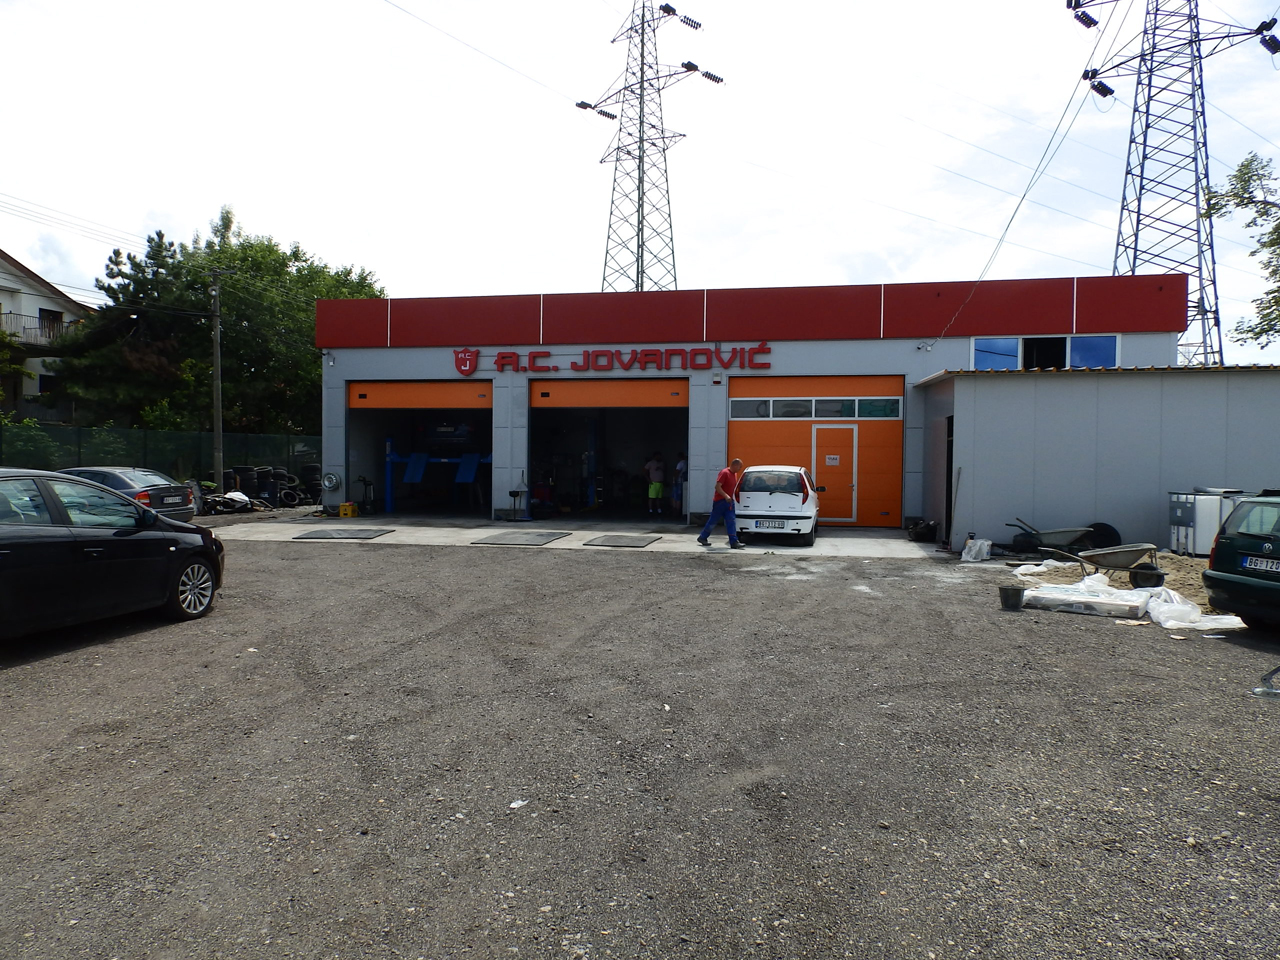 CAR CENTER JOVANOVIC Replacement parts Belgrade - Photo 1